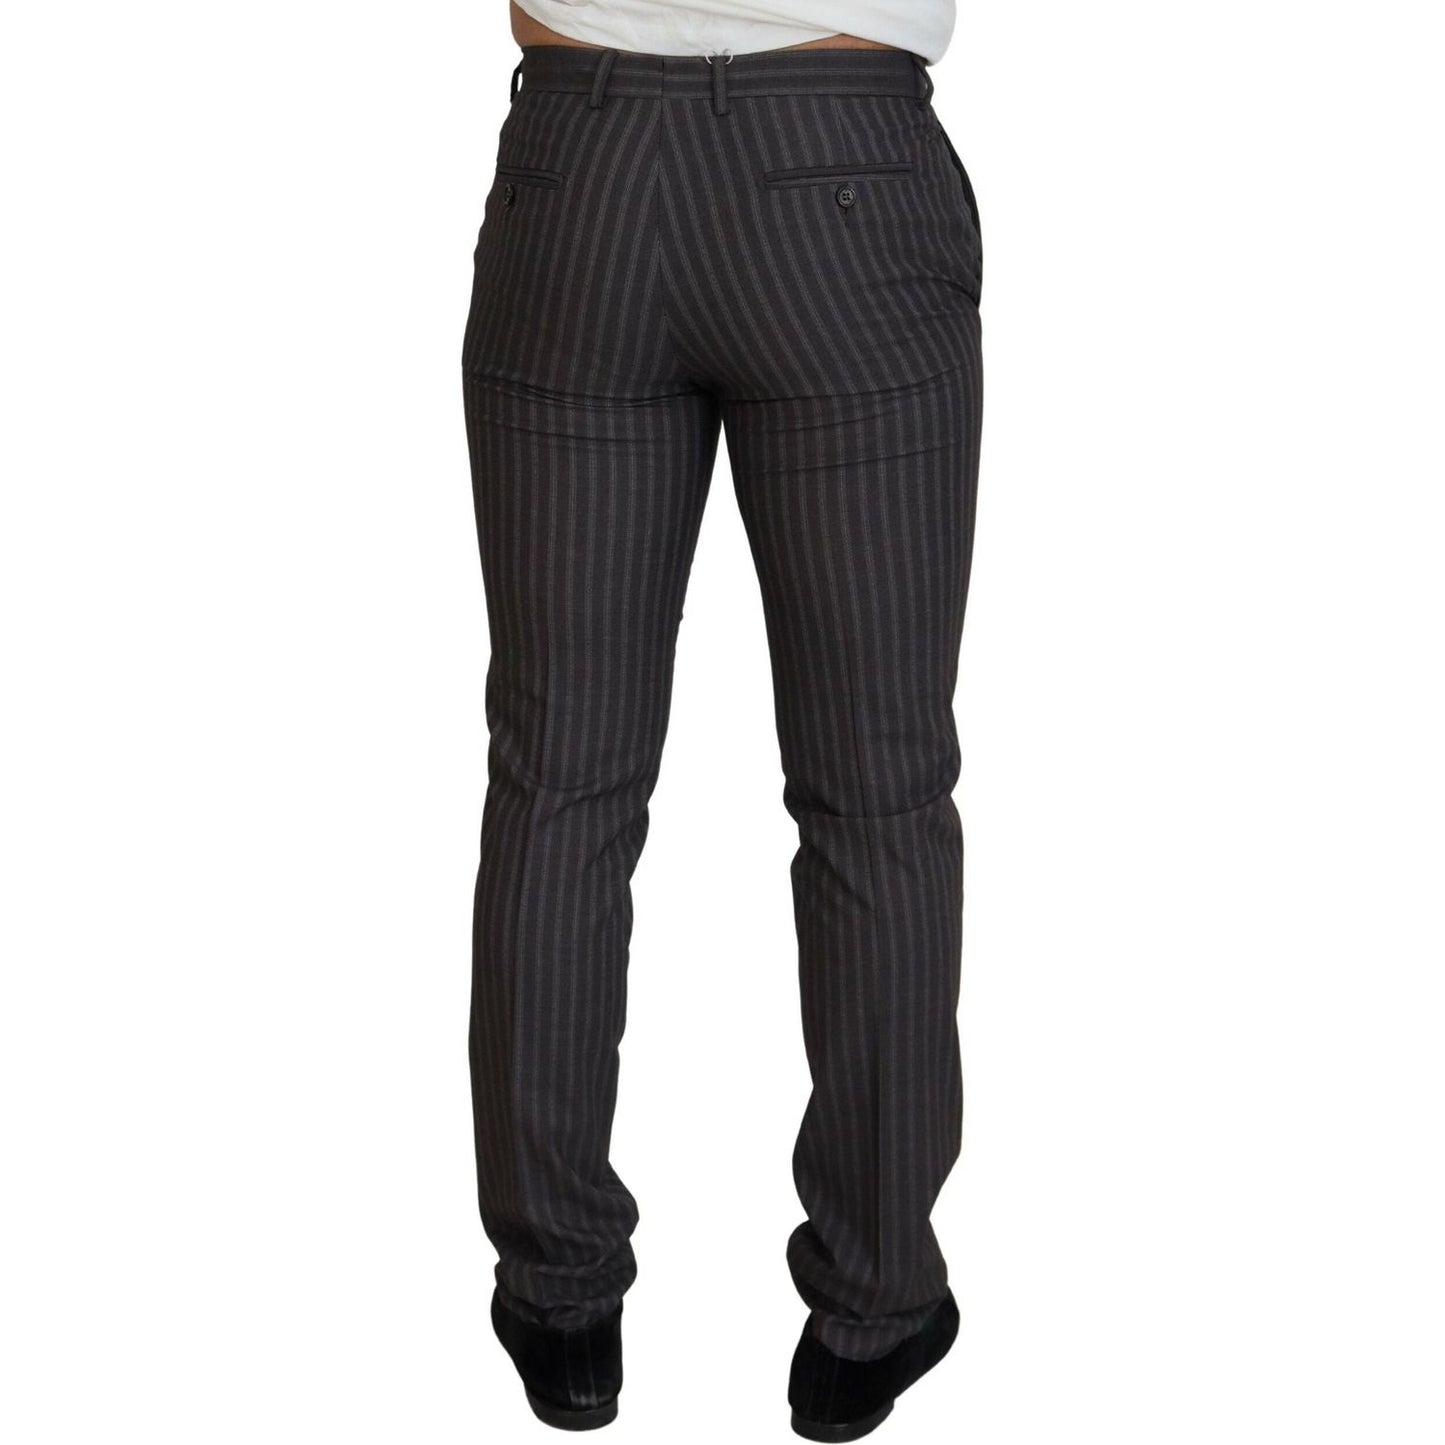 BENCIVENGA Elegant Striped Dress Pants for Men brown-stripes-slim-fit-men-pants IMG_0761-scaled-761a6160-f87.jpg